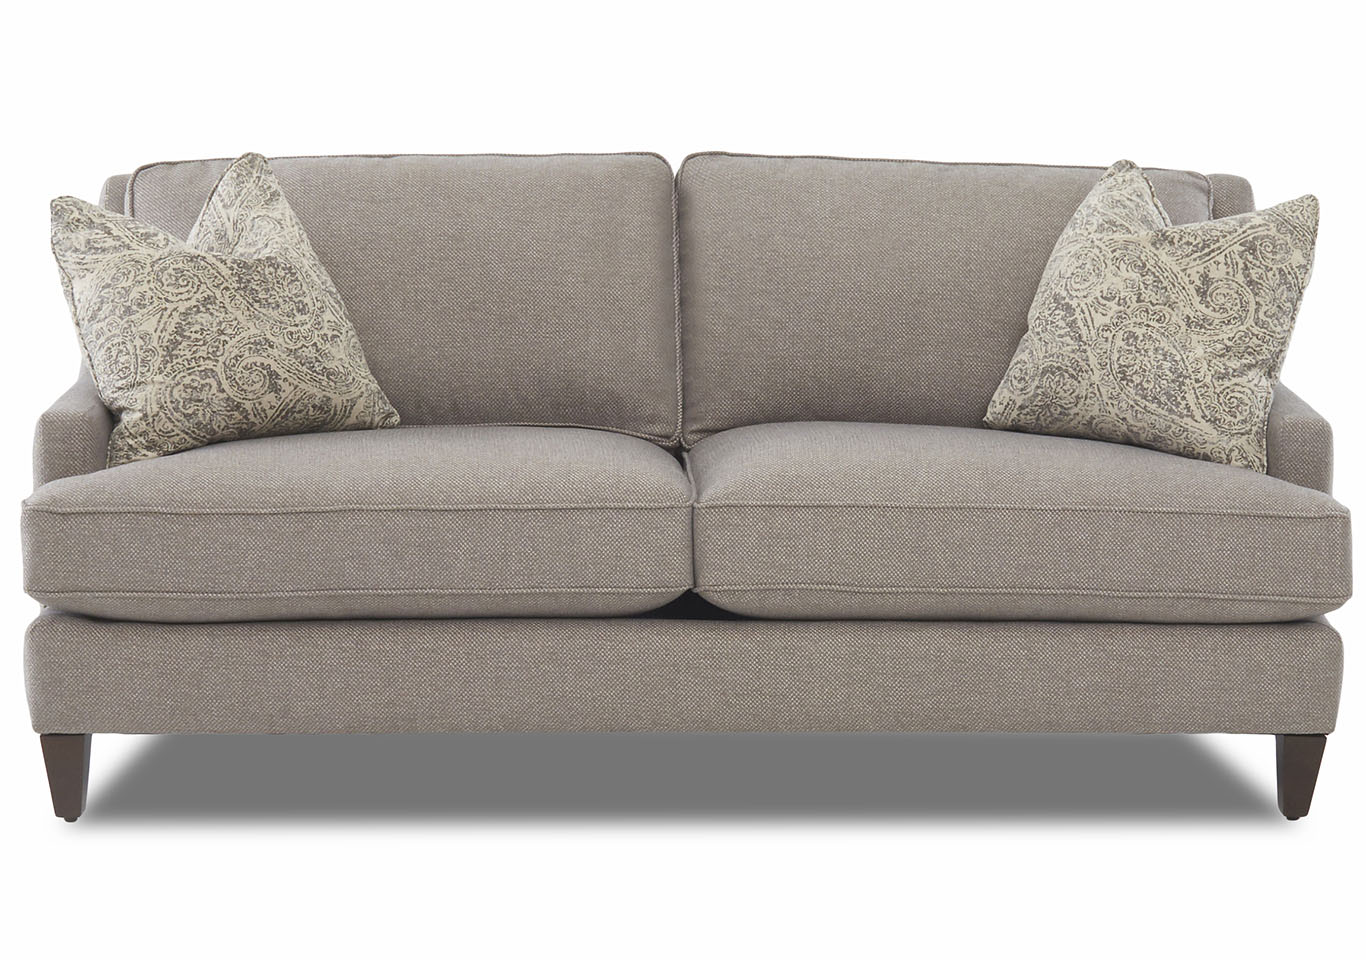 Duchess Alcott Ash Stationary Fabric Sofa,Klaussner Home Furnishings